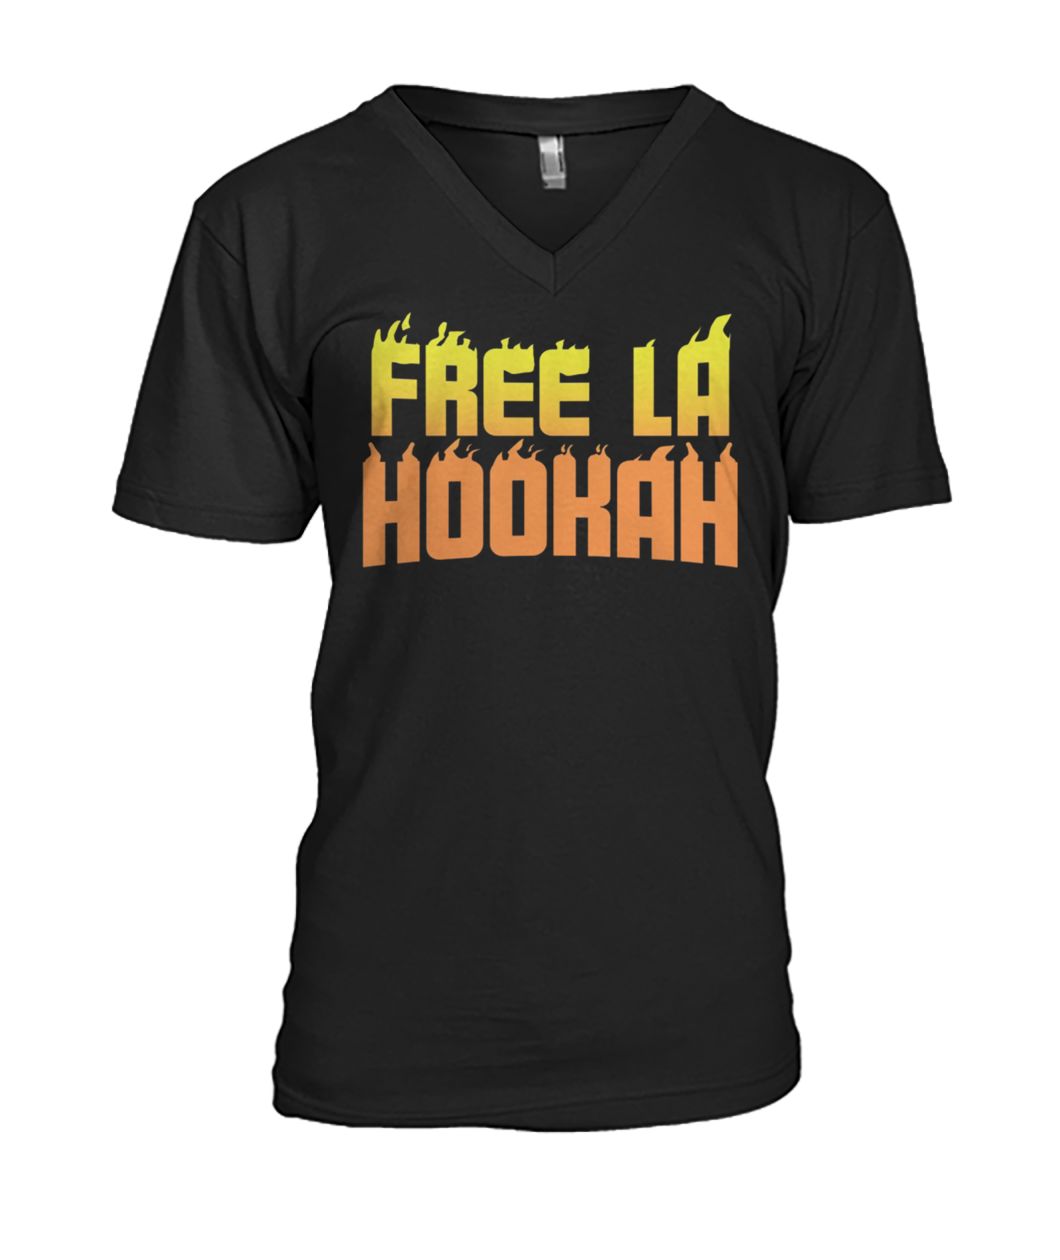 Free la hookah mens v-neck